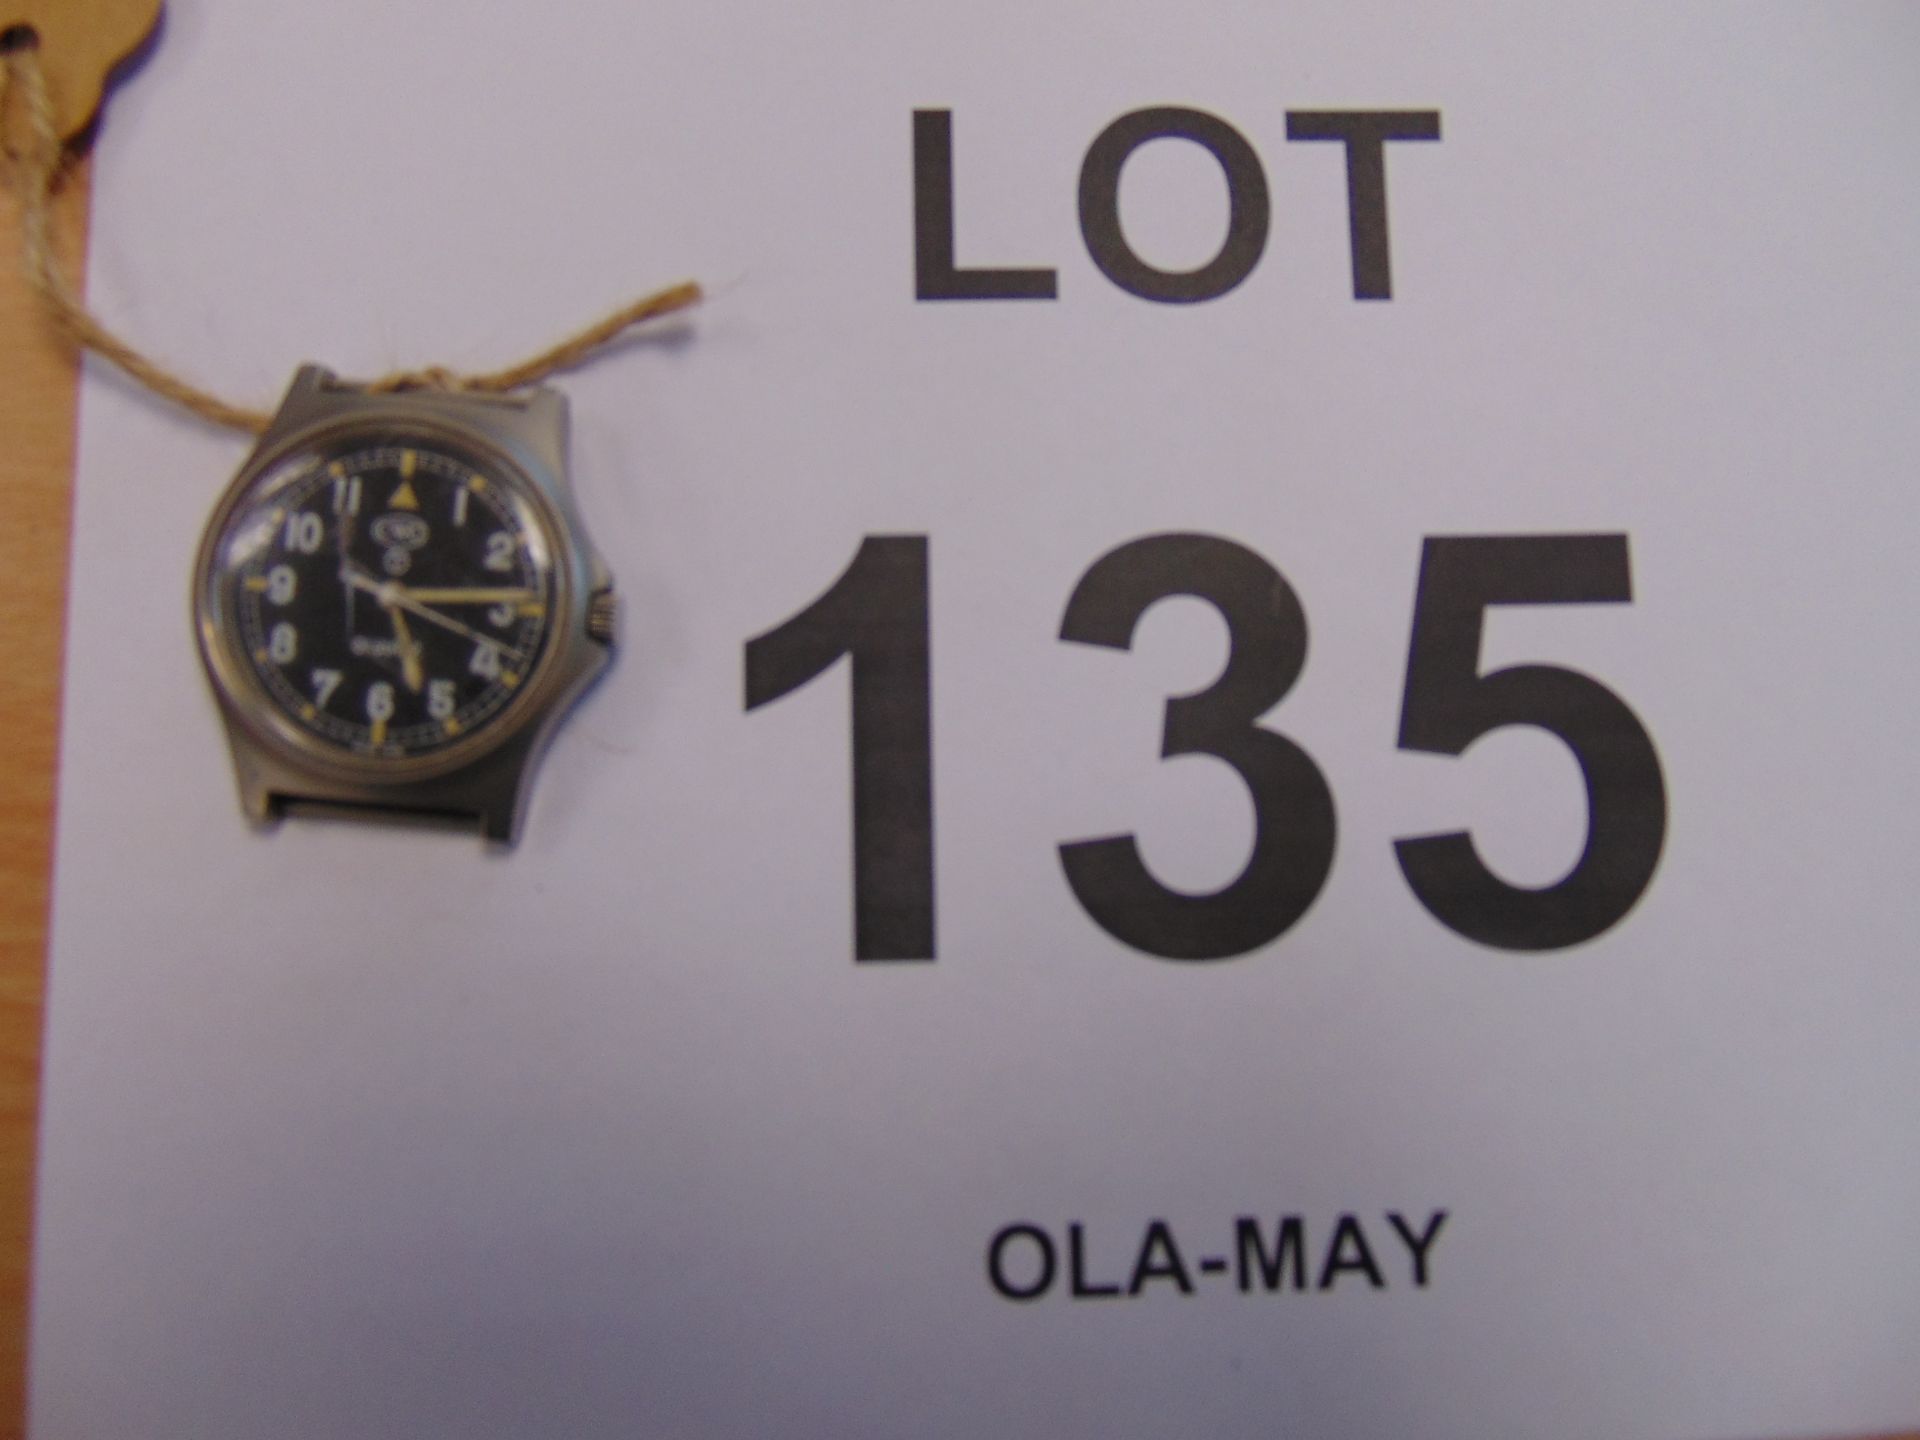 CWC (Cabot Watch Co Switzerland) British Army W10 Service Watch, SNo 1066, Date 1998 - Image 4 of 4